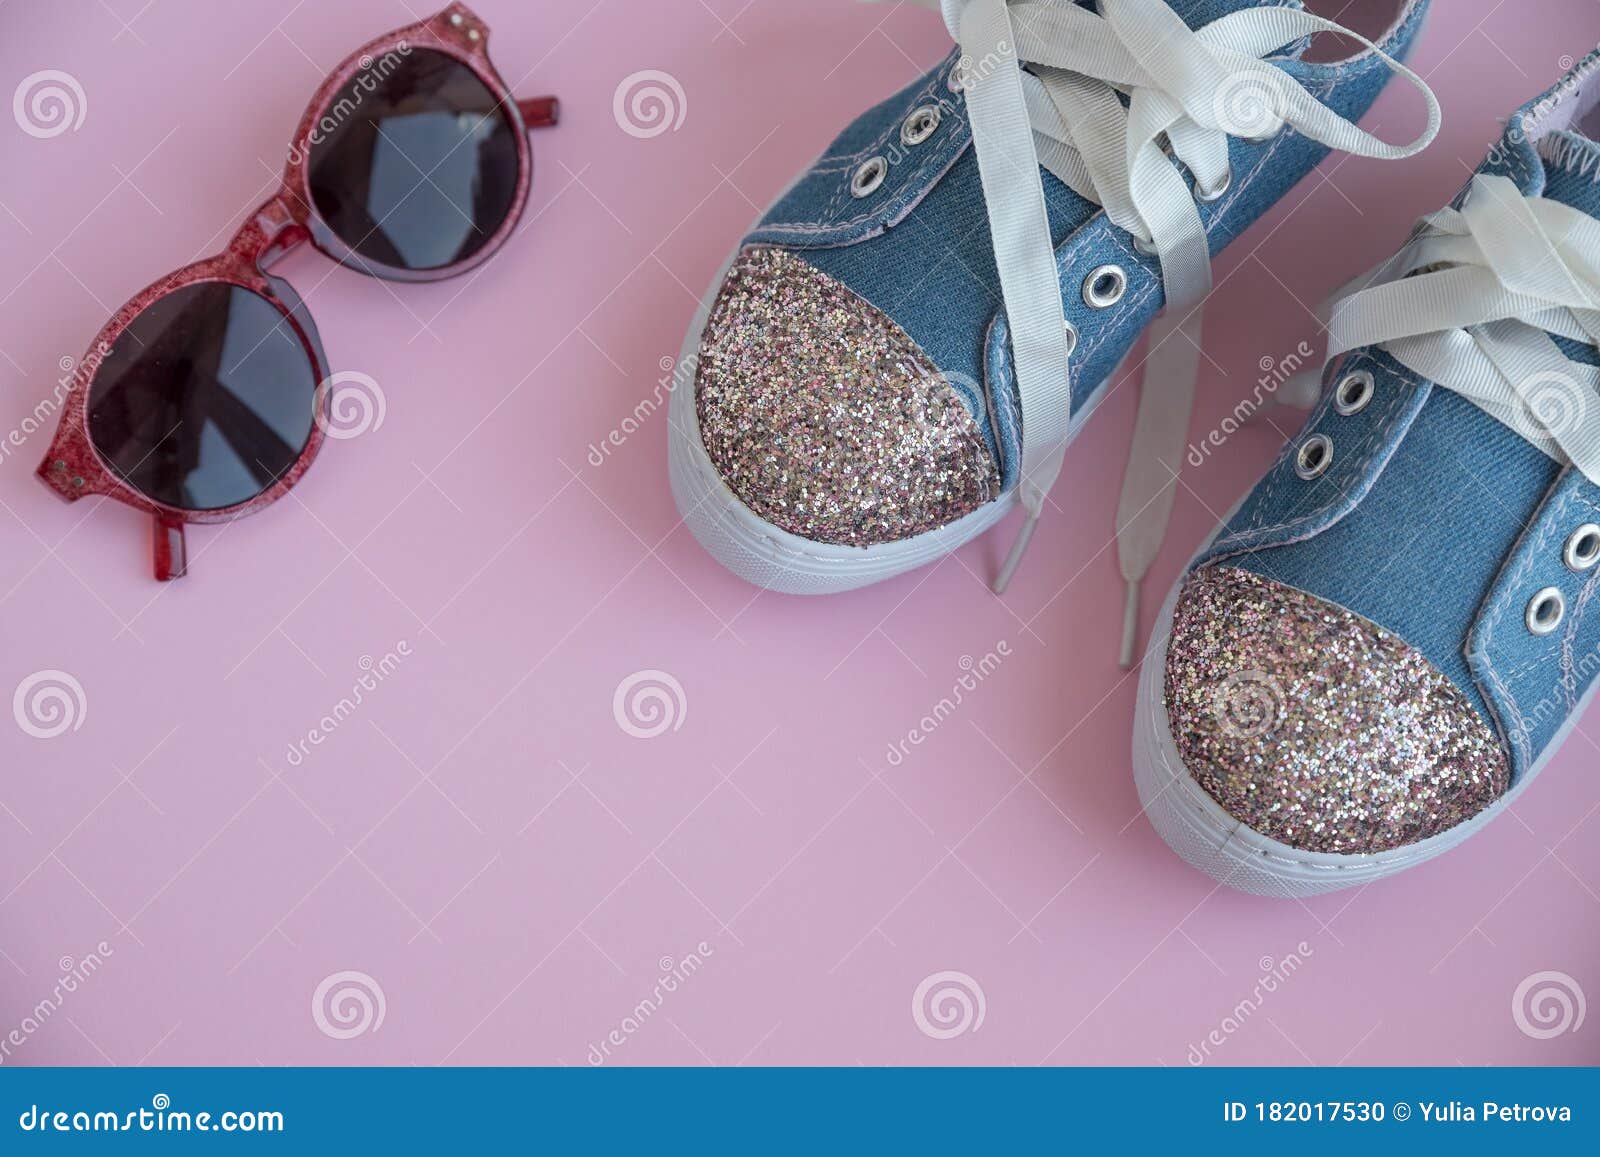 smart shoes girls